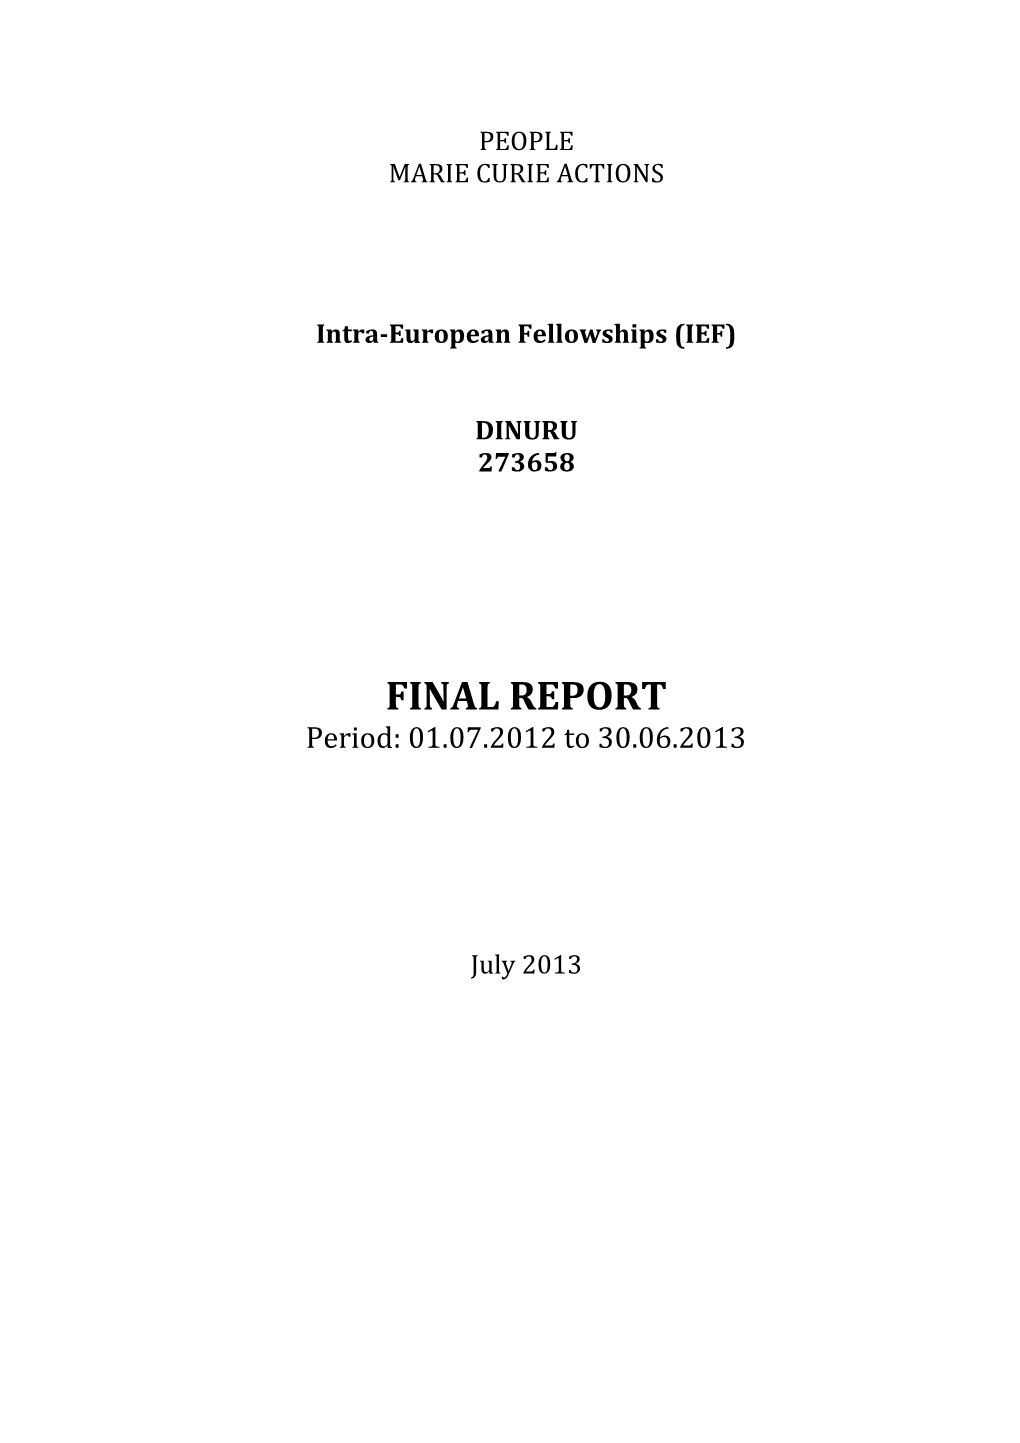 Intra-European Fellowships (IEF)